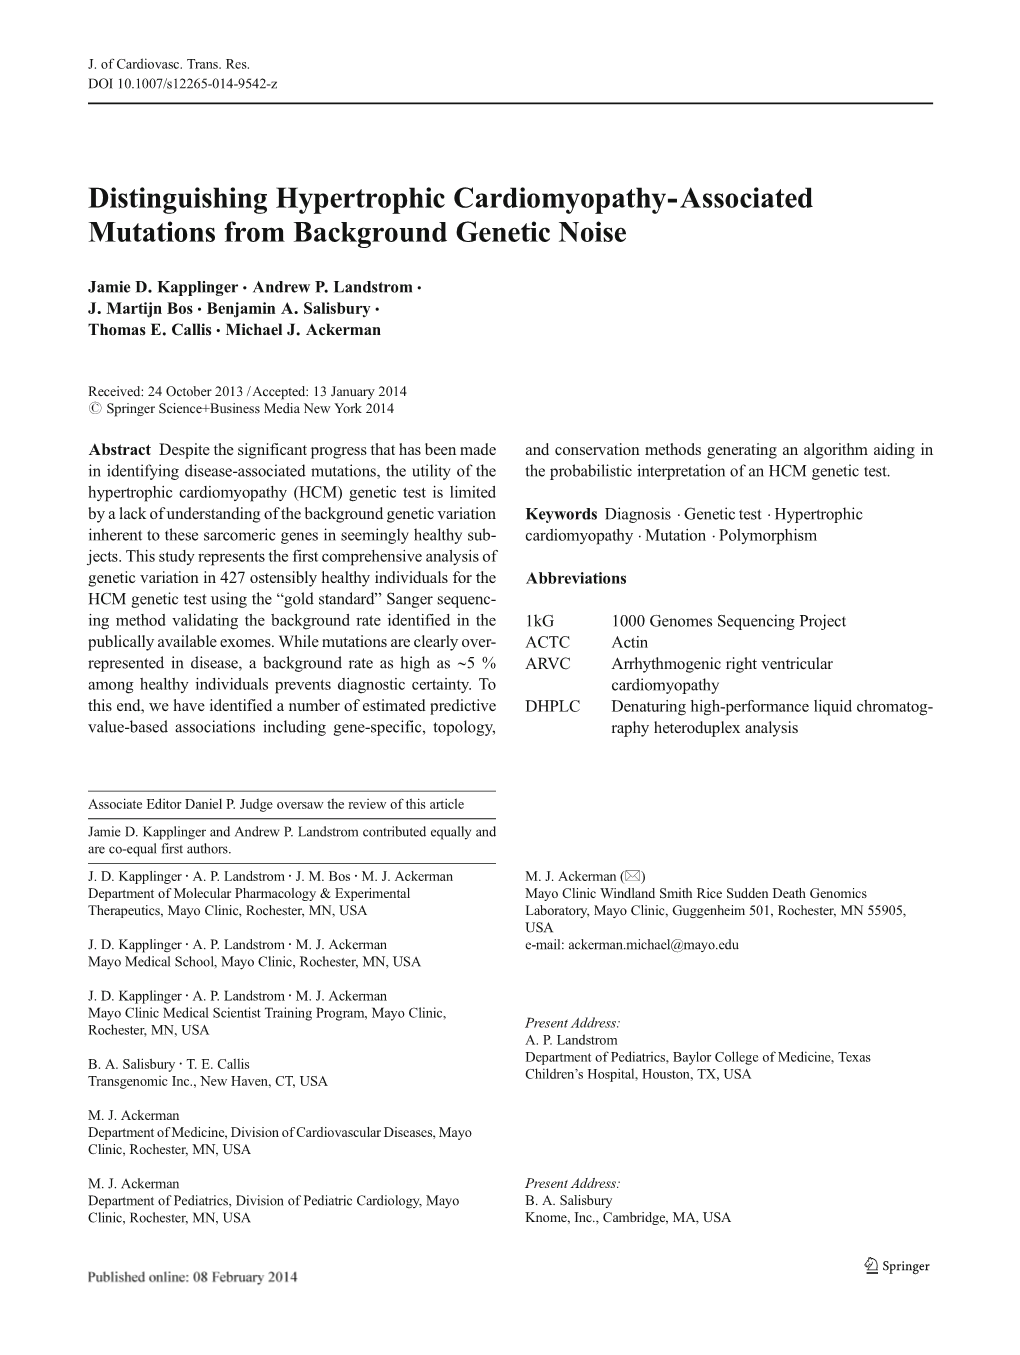 Distinguishing Hypertrophic Cardiomyopathy-Associated Mutations from Background Genetic Noise